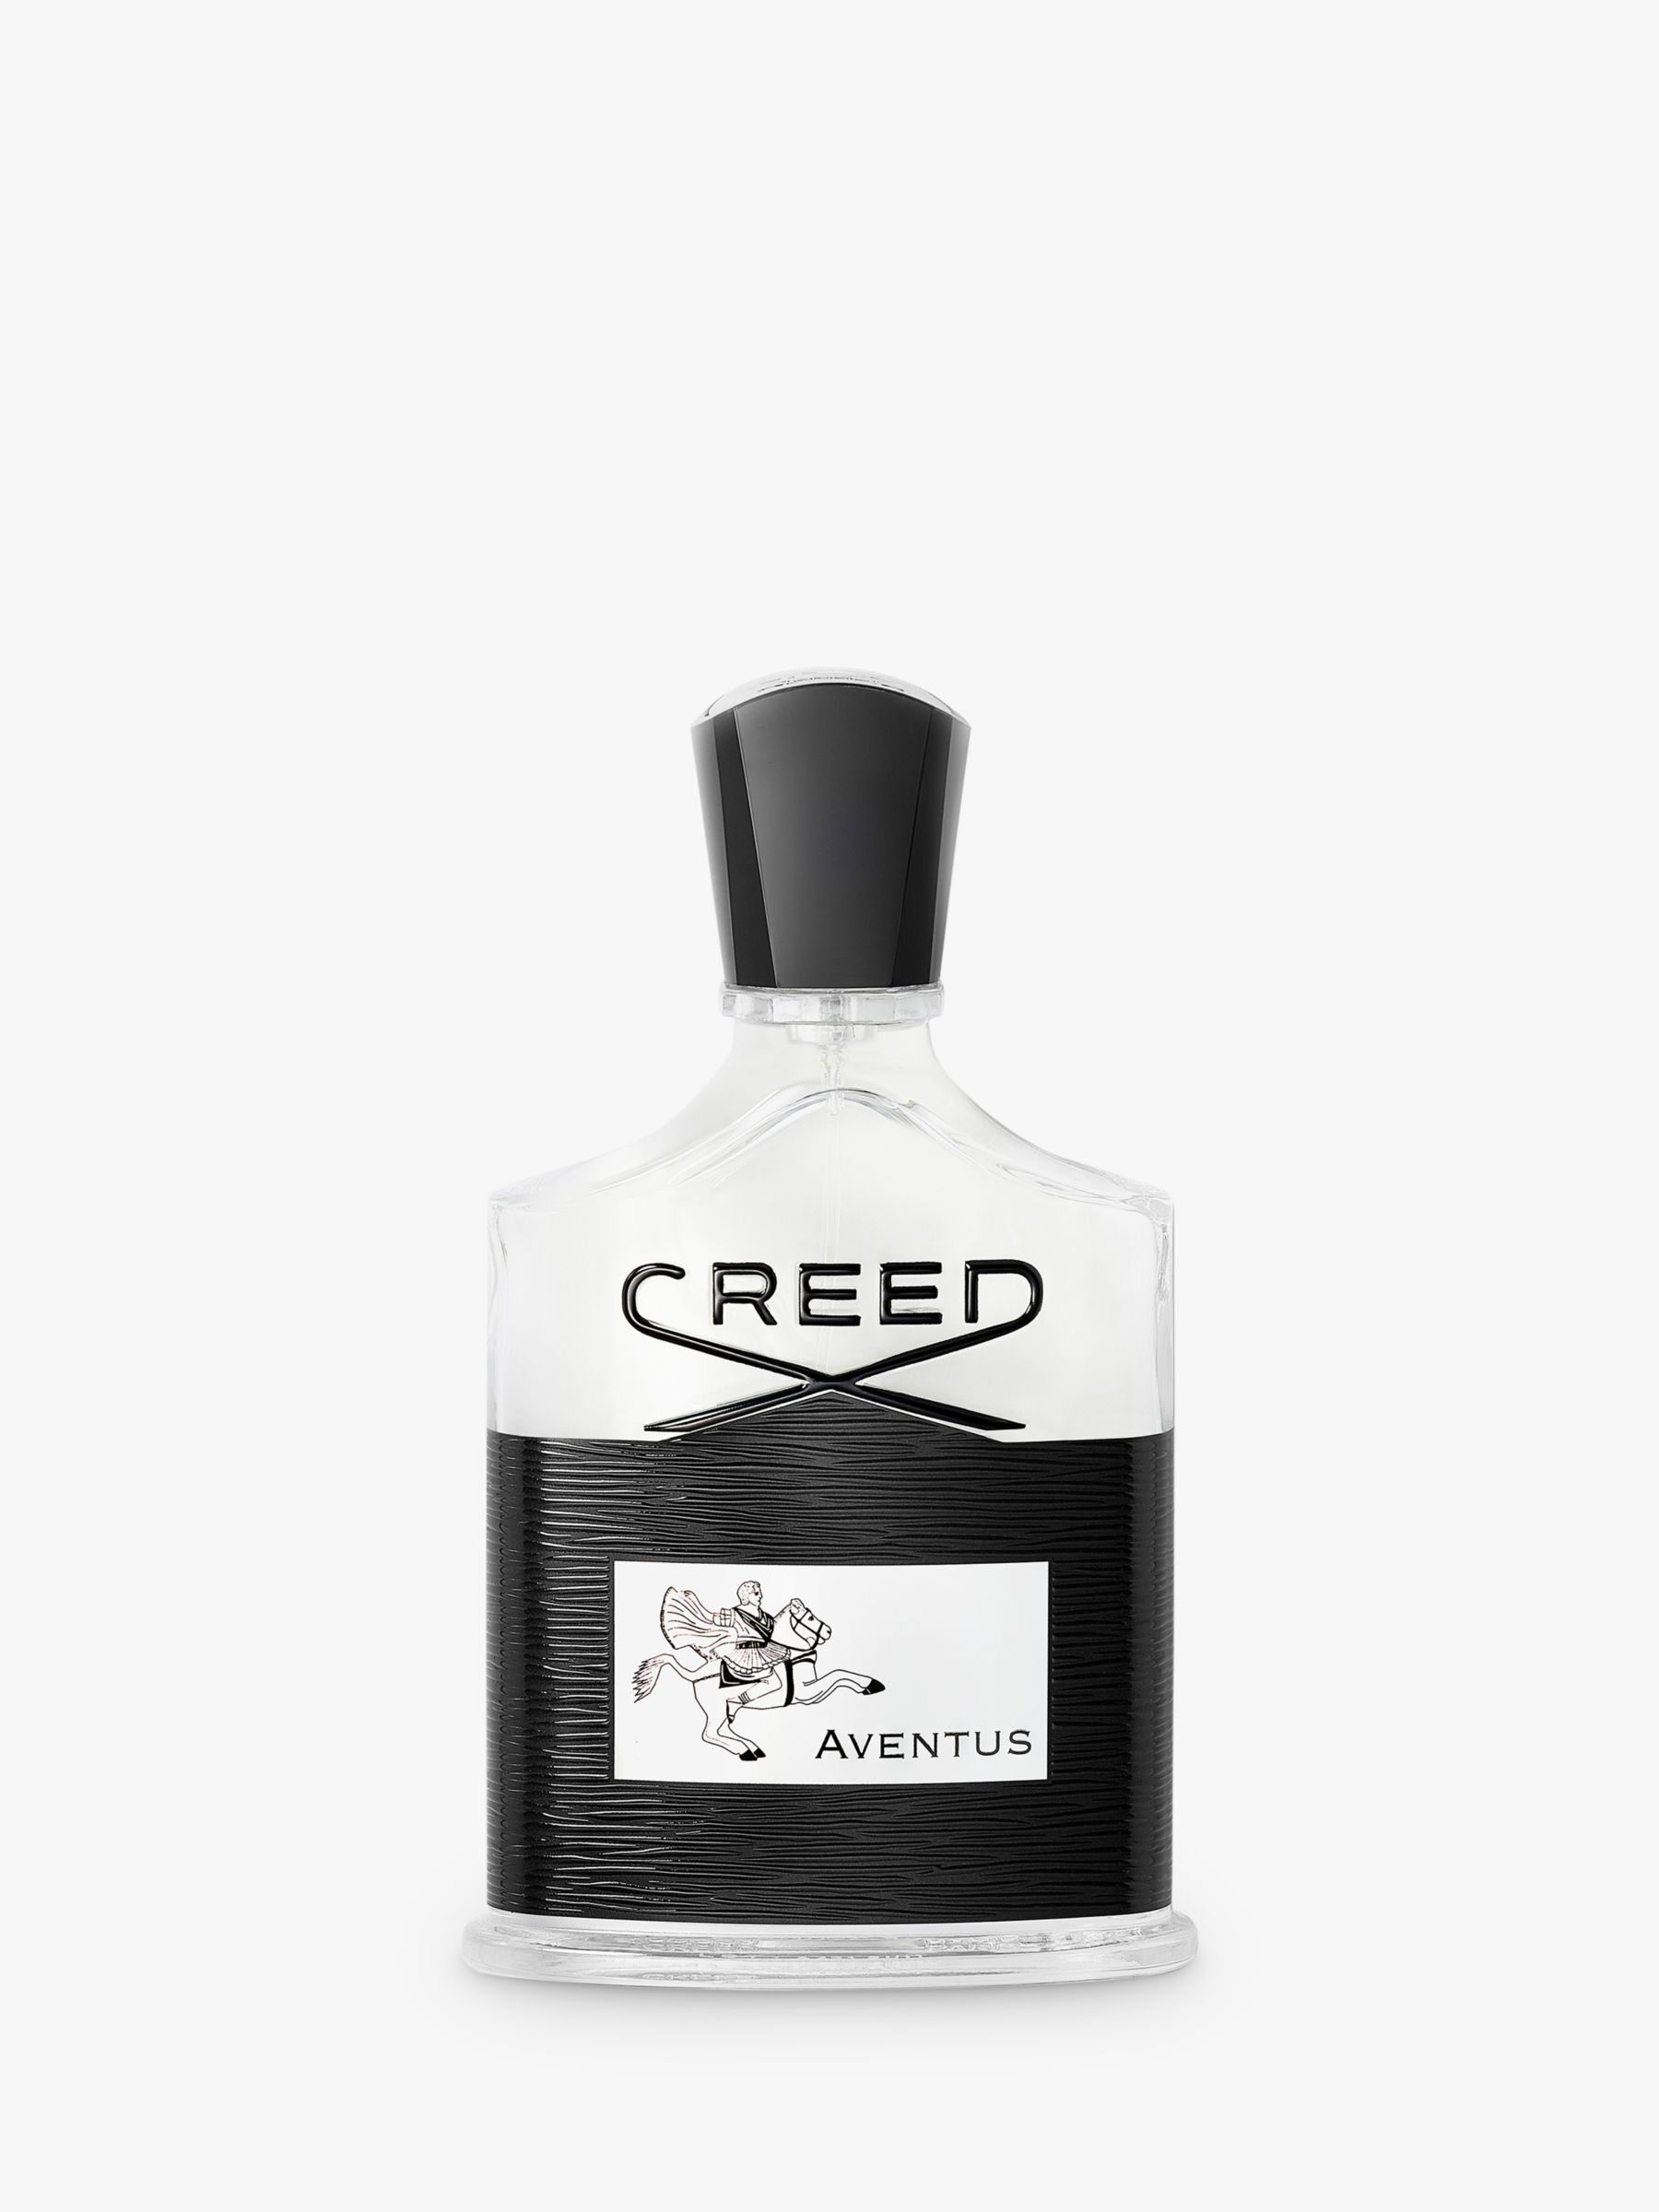 CREED Aventus Eau de Parfum Spray, 50ml | John Lewis (UK)